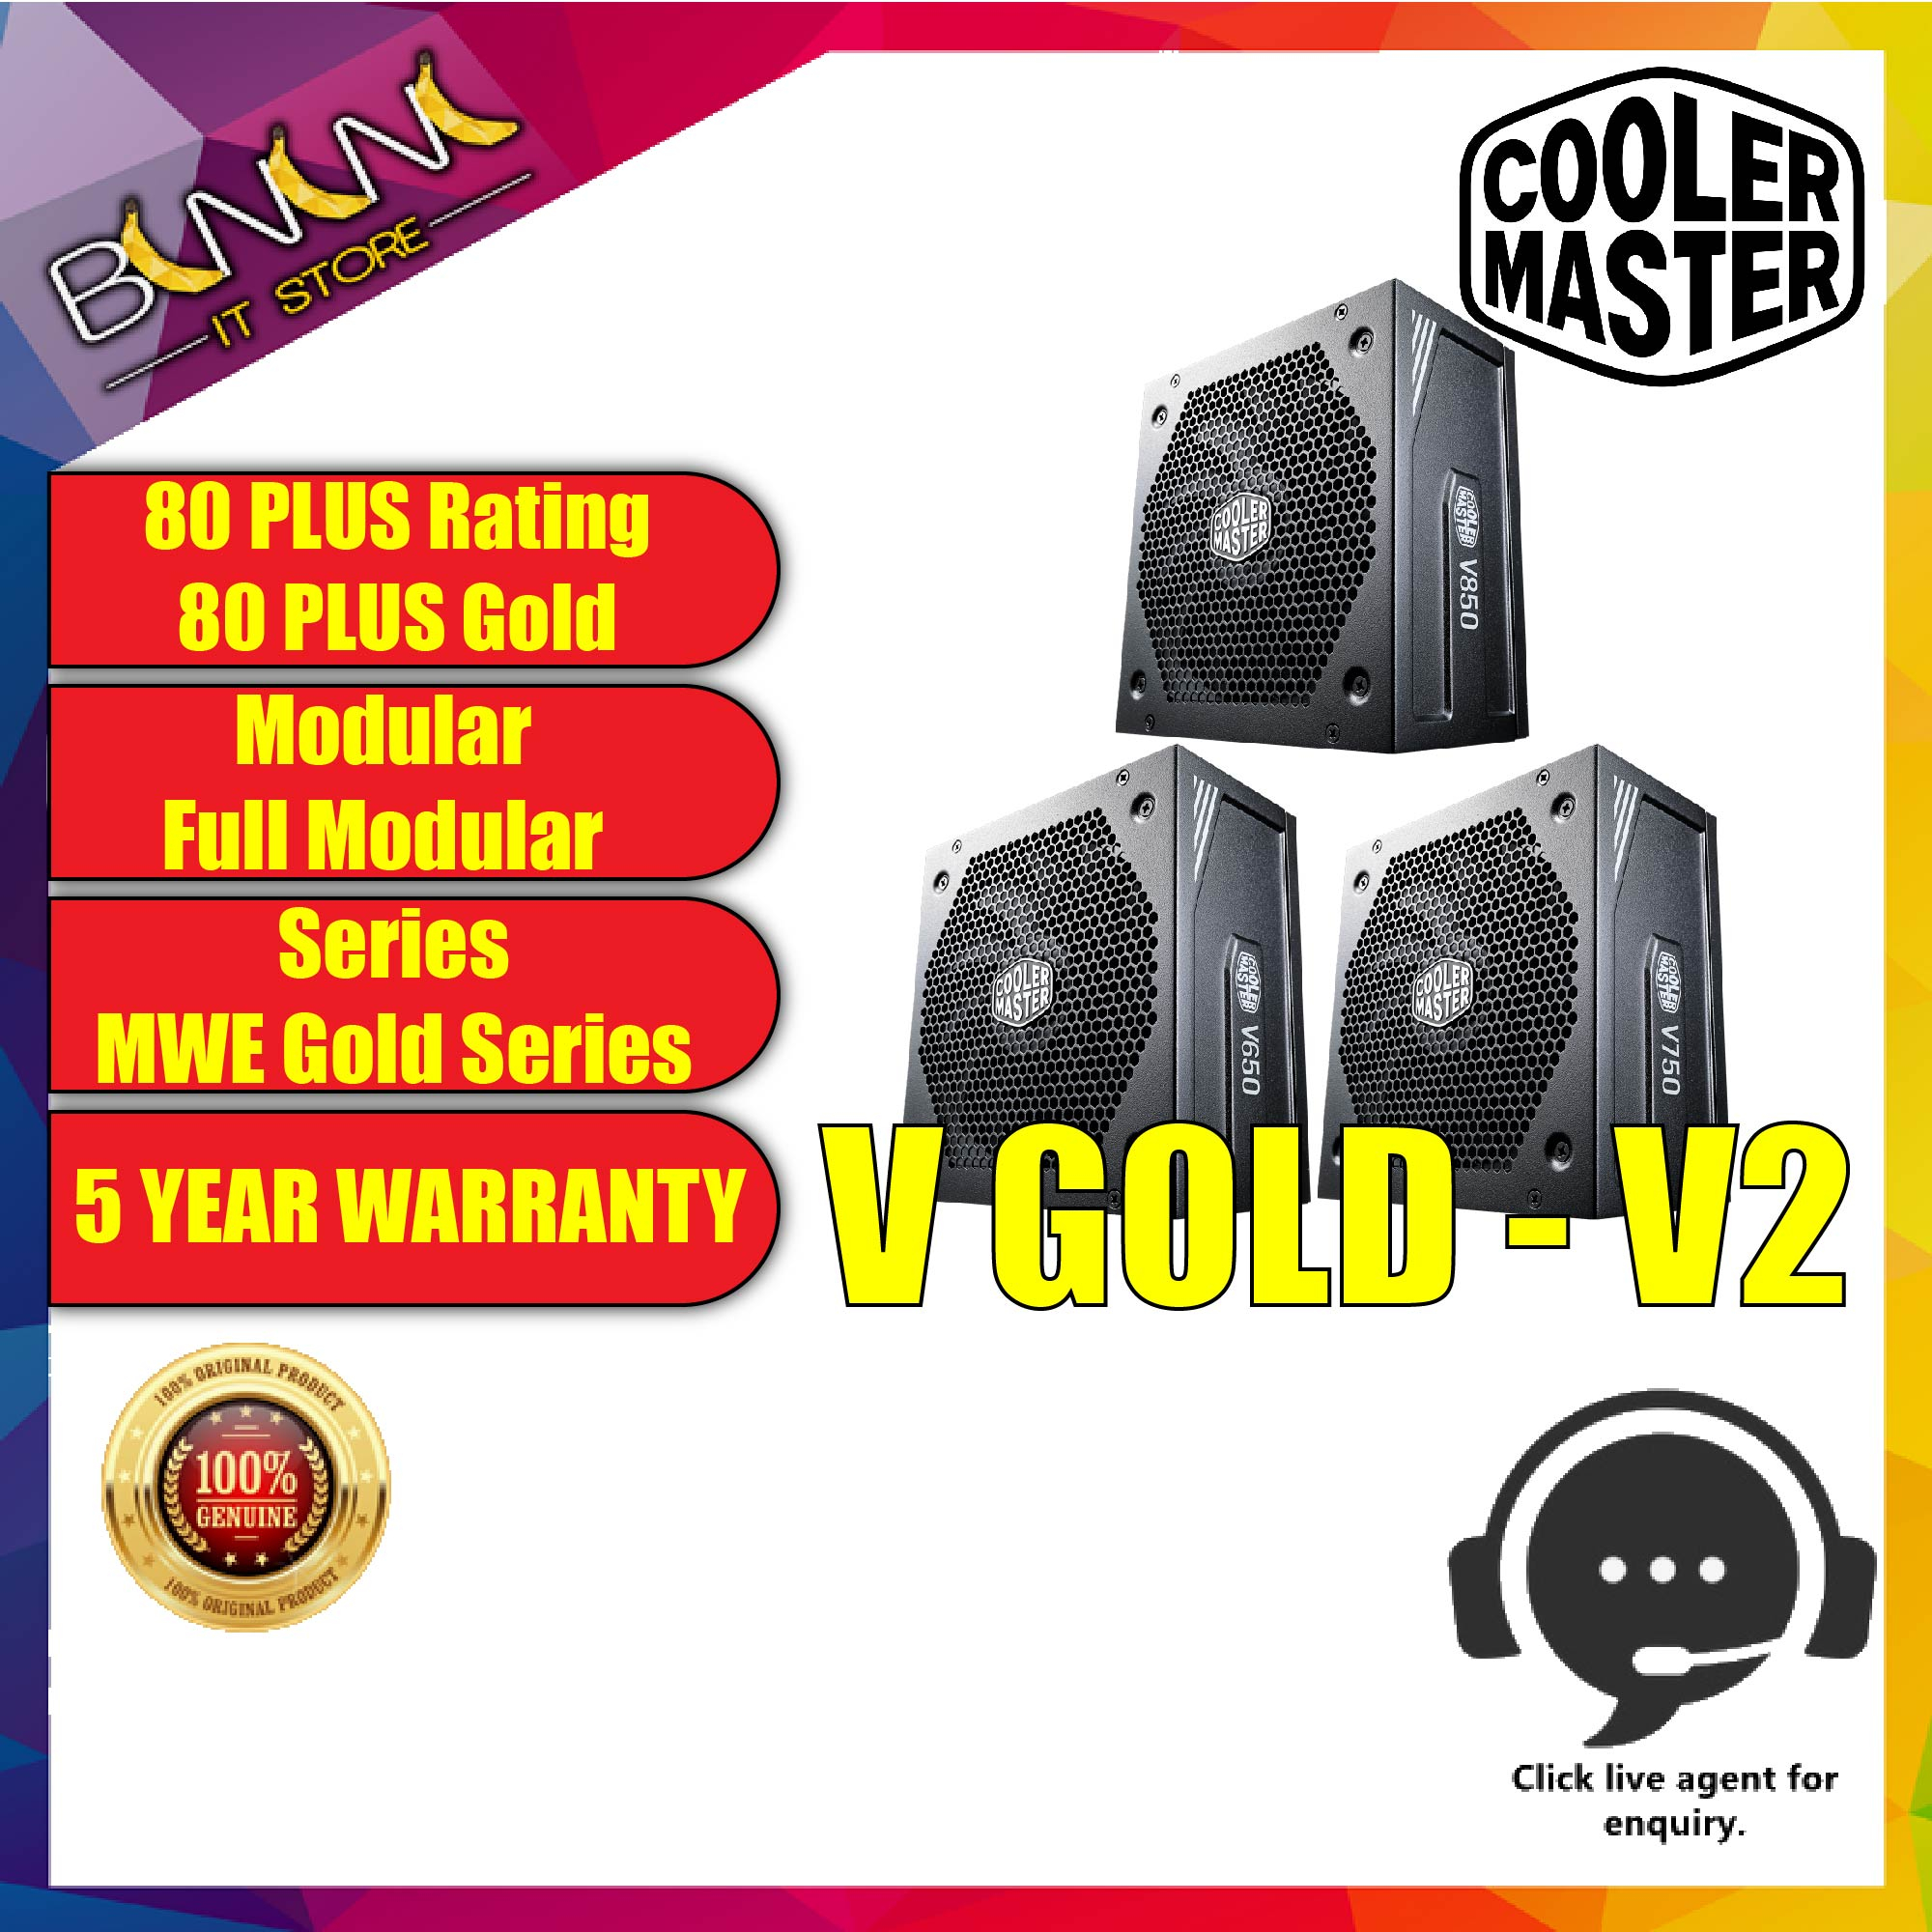 Cooler Master mwe 750 watt gold v2 - Computer Accessories